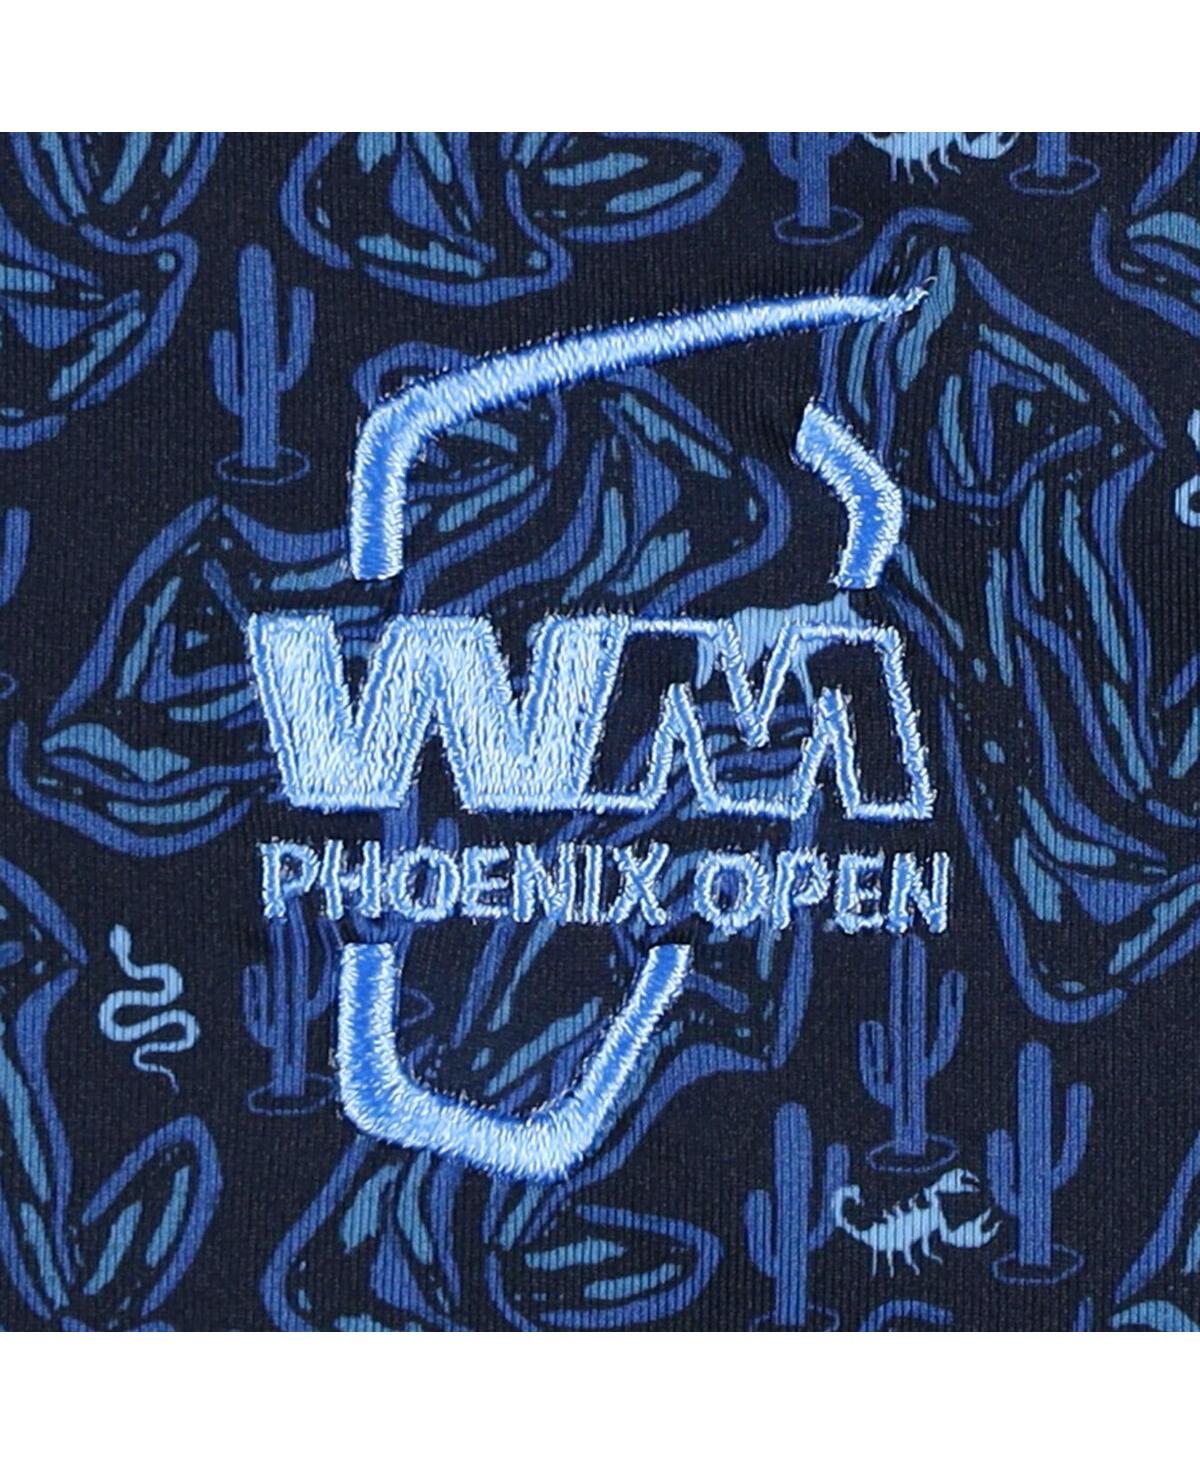 Shop Footjoy Men's  Navy Wm Phoenix Open Prodry Polo Shirt